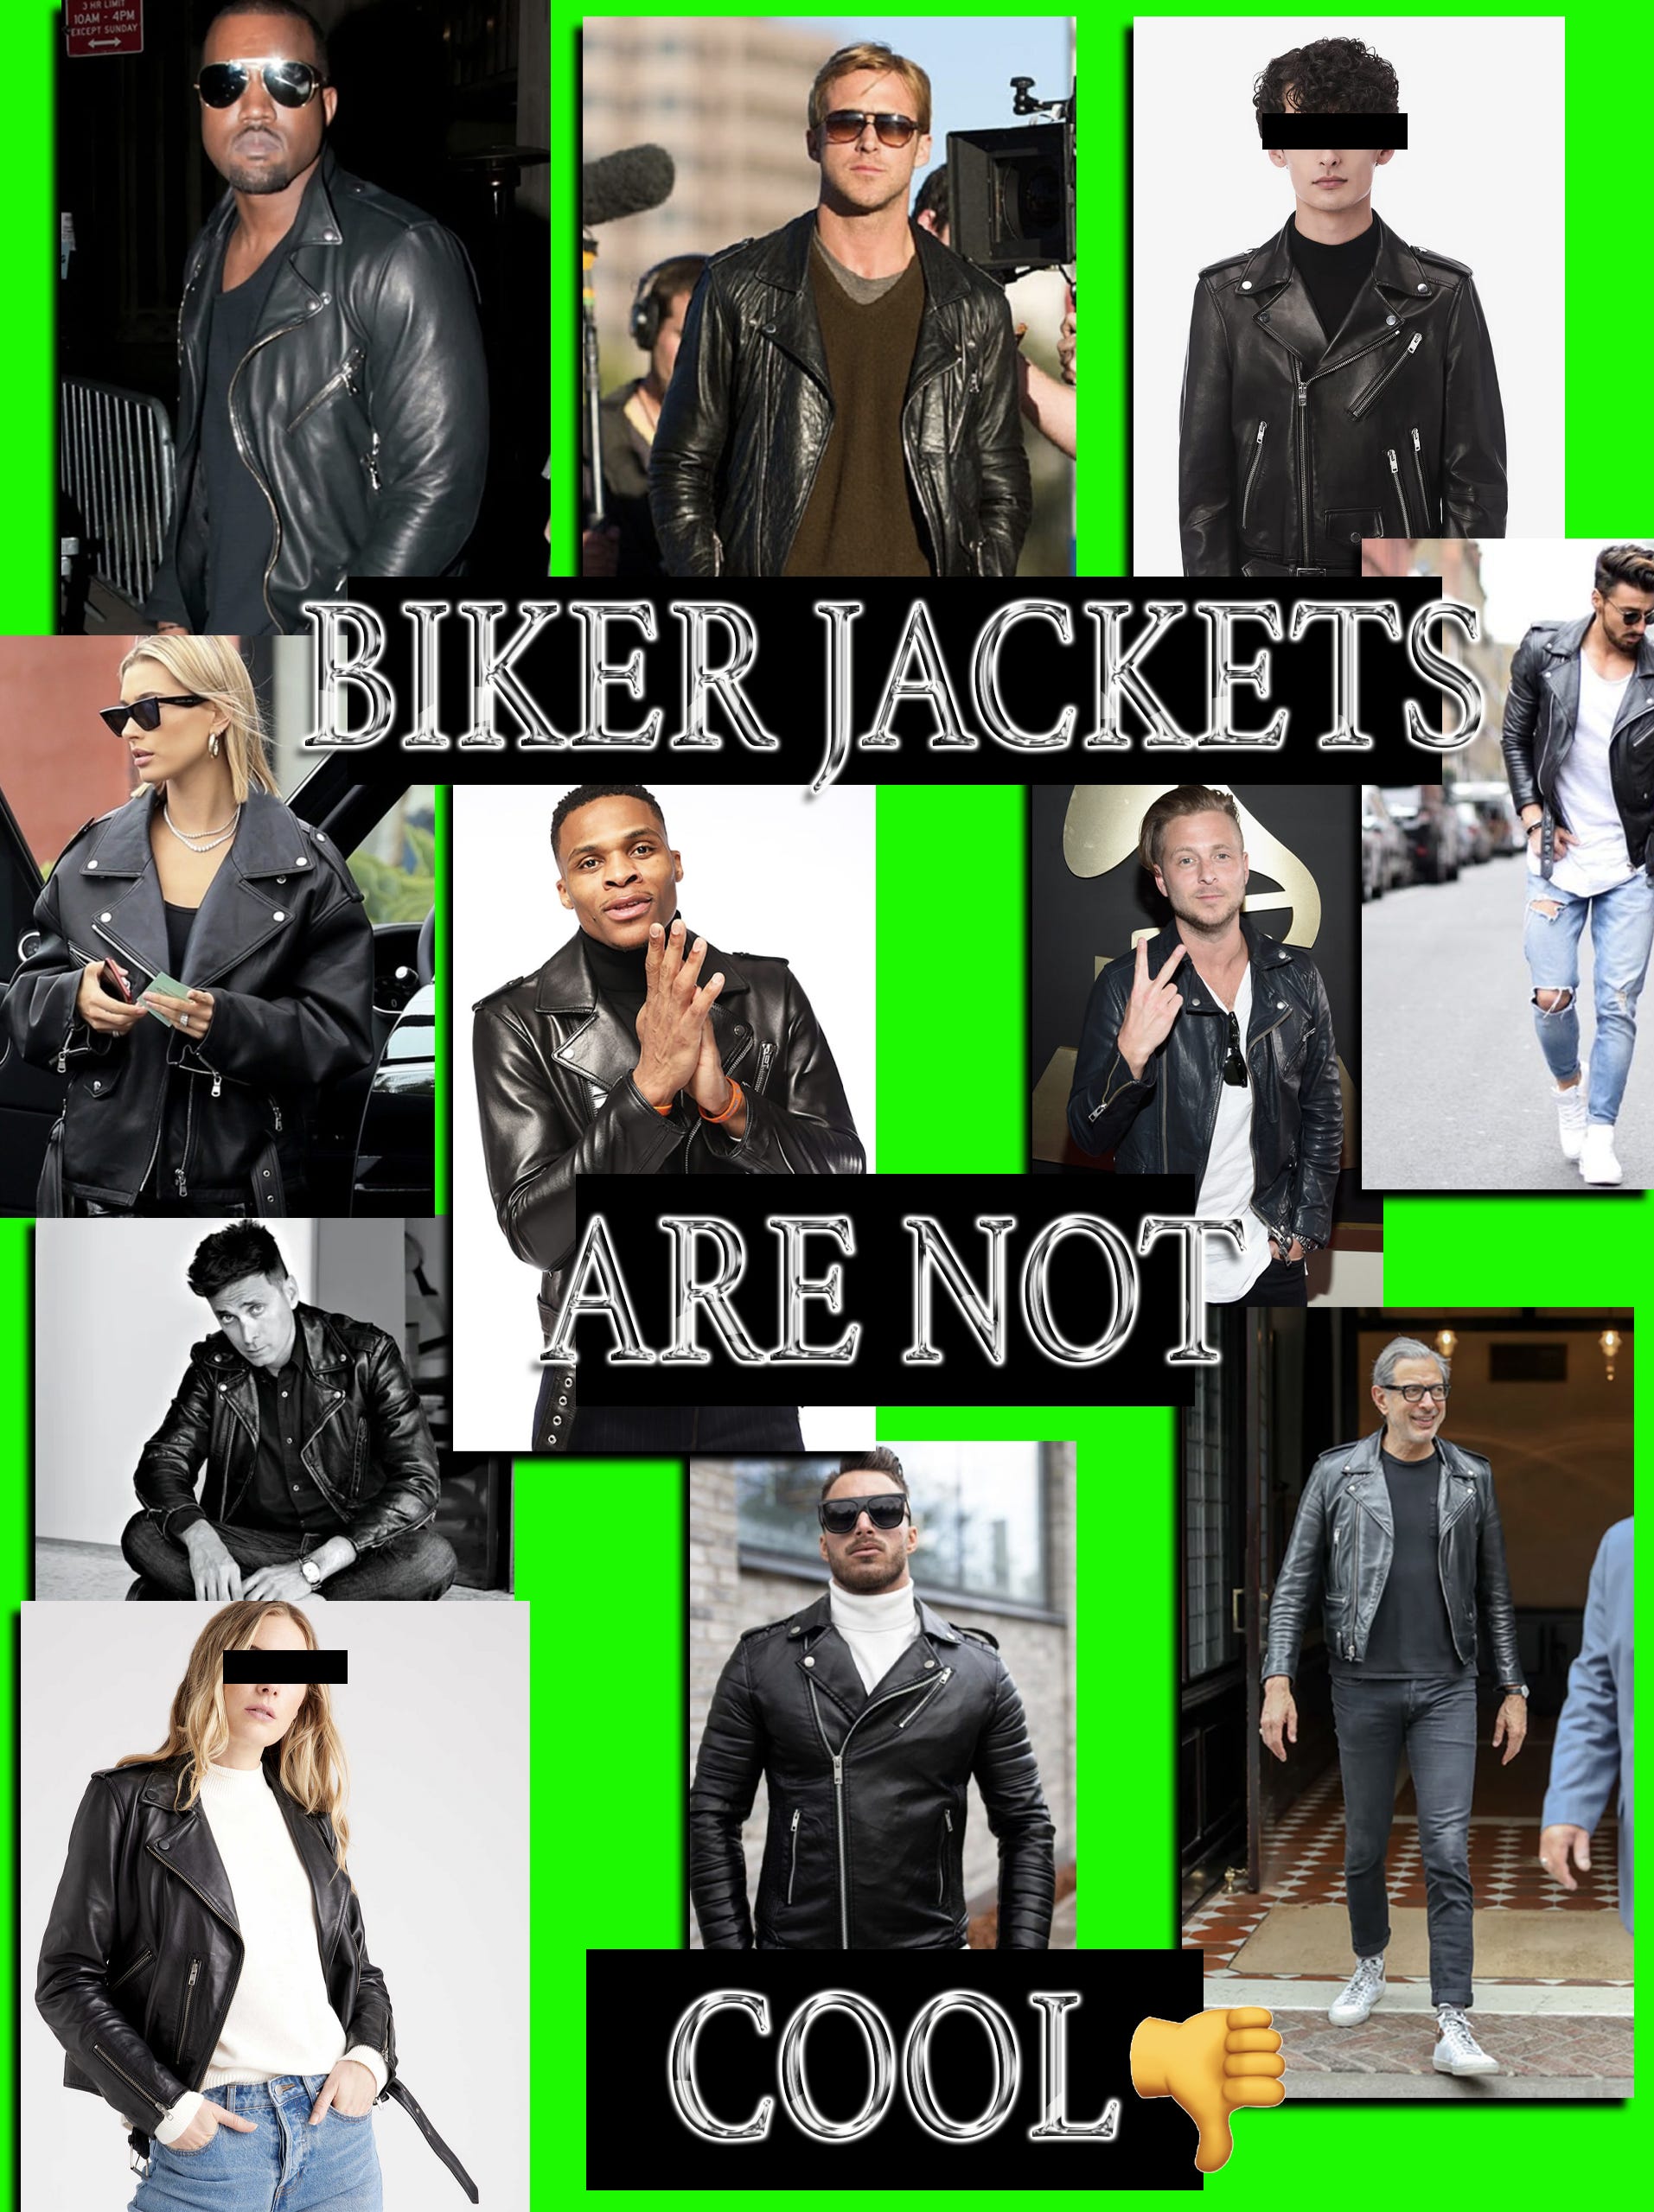 Biker jackets are not cool - Blackbird Spyplane